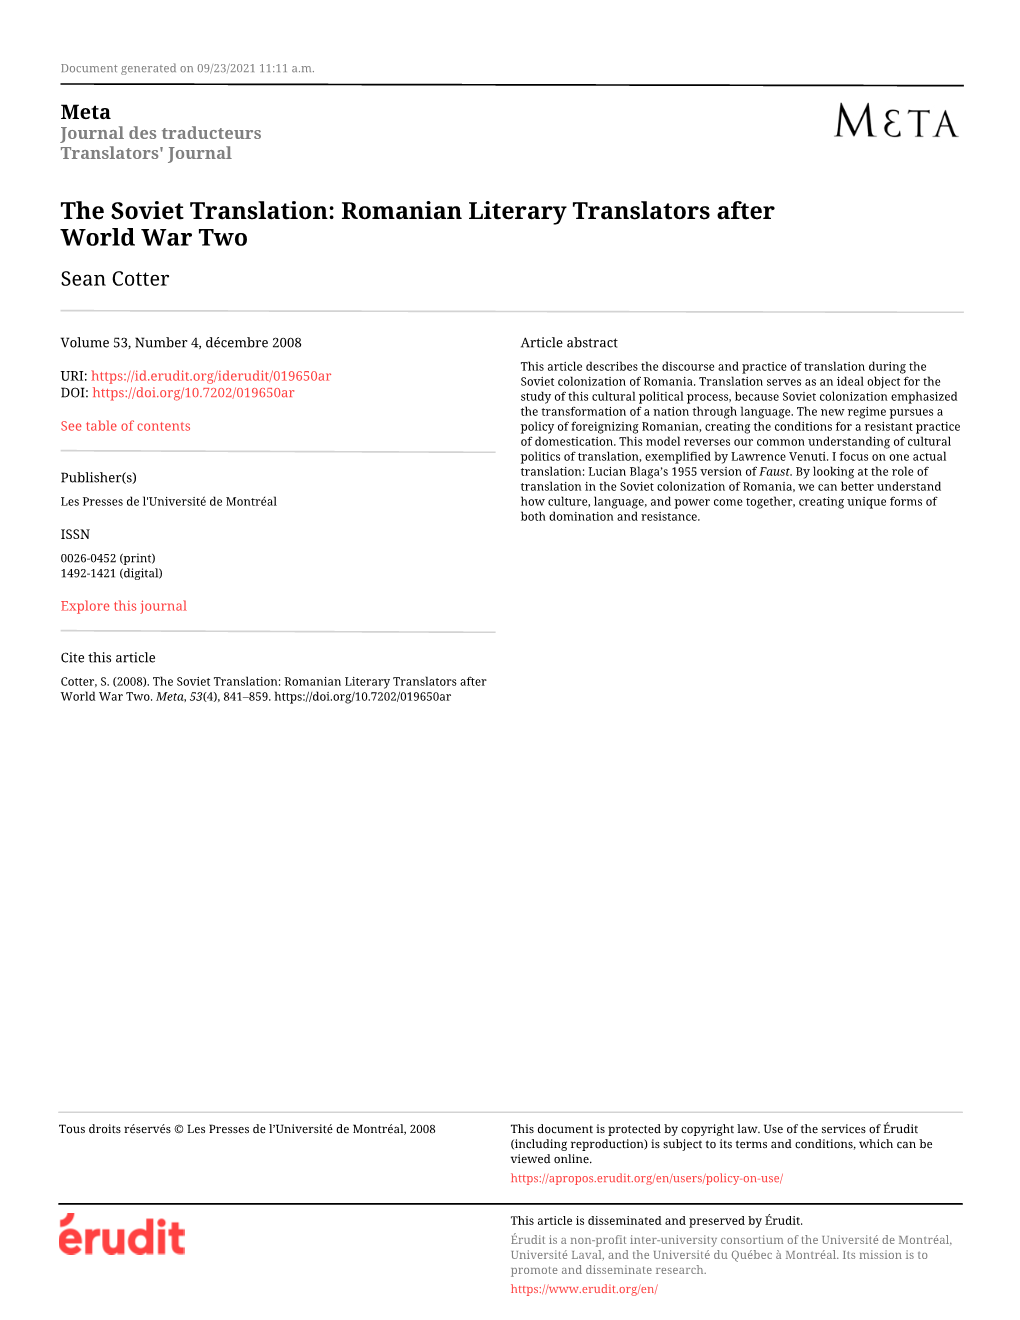 The Soviet Translation: Romanian Literary Translators After World War Two Sean Cotter